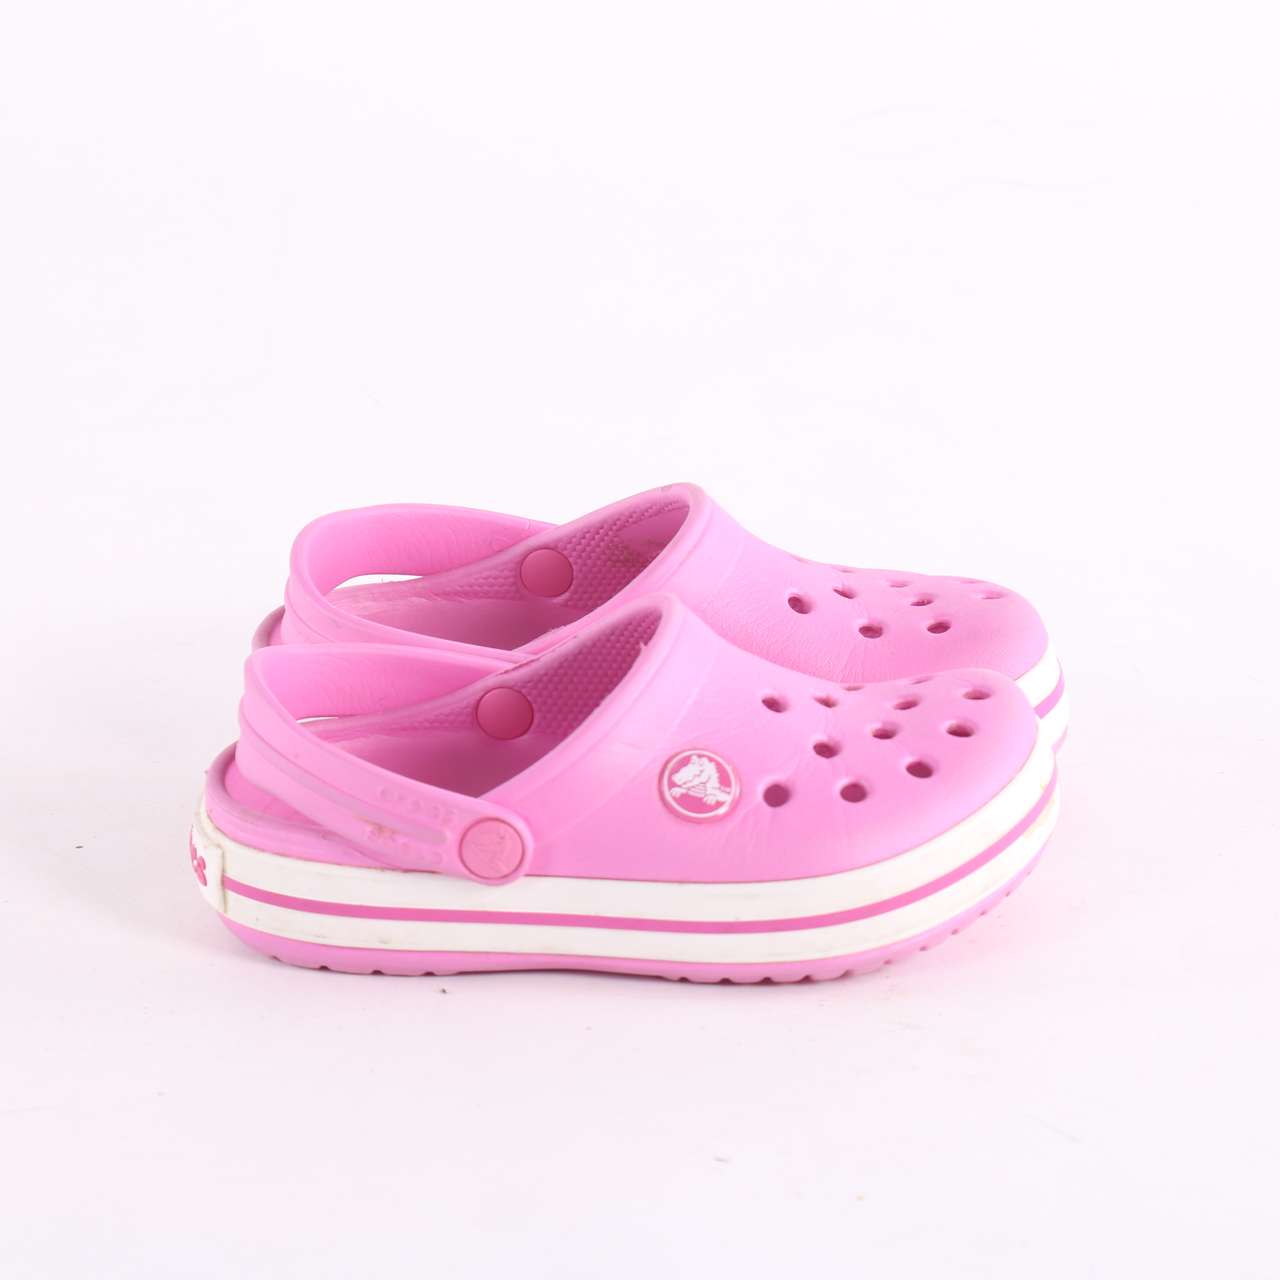 Crocs Pink Crocs with White - Size 9 - White Rose Fashion